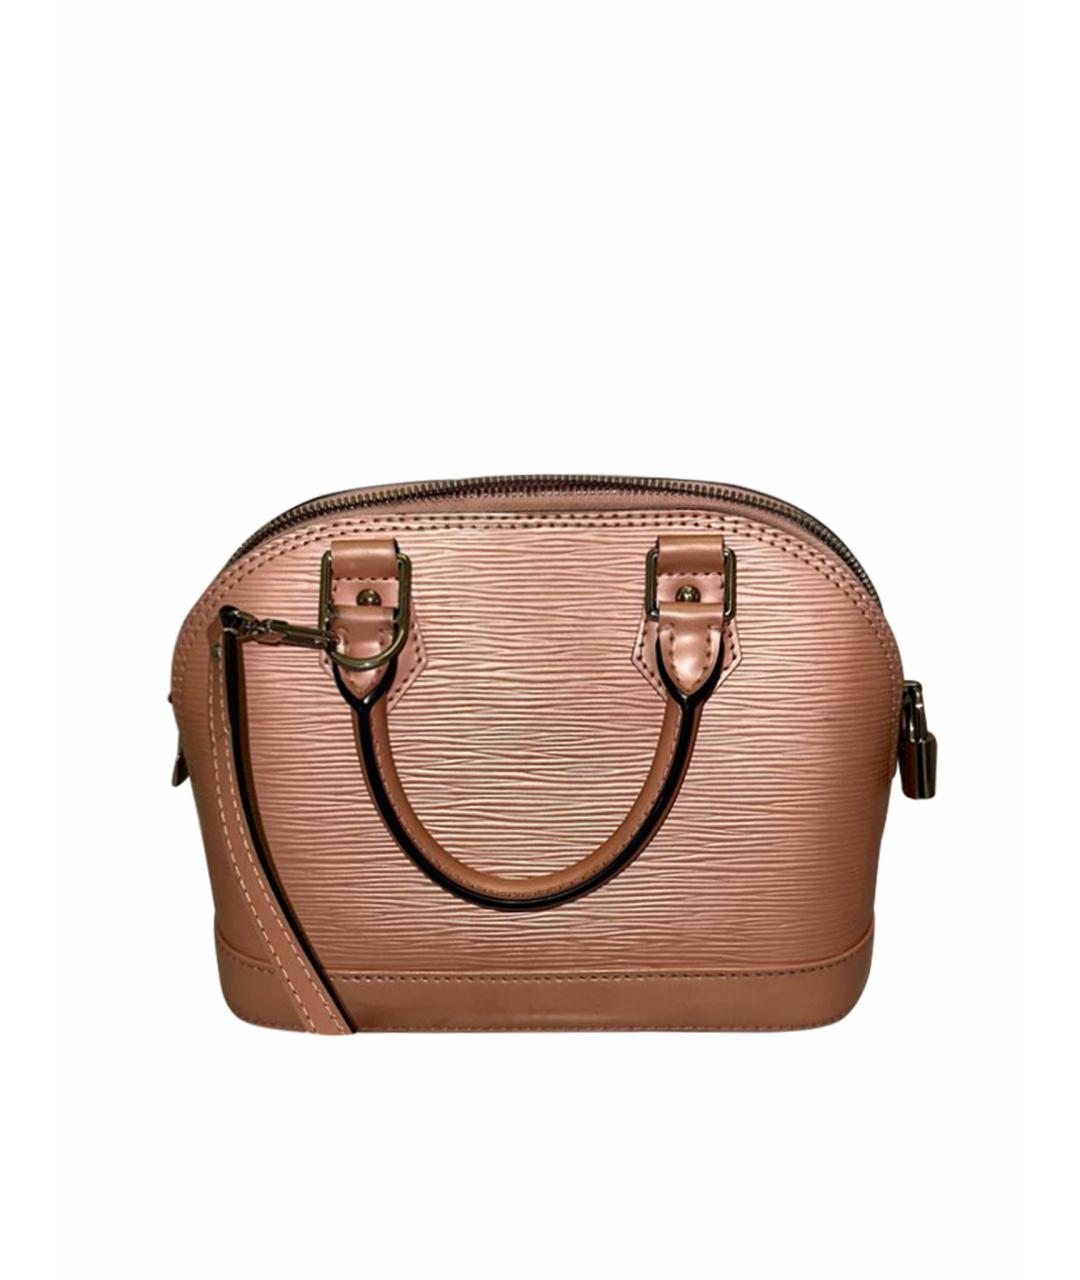 LOUIS VUITTON PRE-OWNED Розовая кожаная сумка с короткими ручками, фото 1